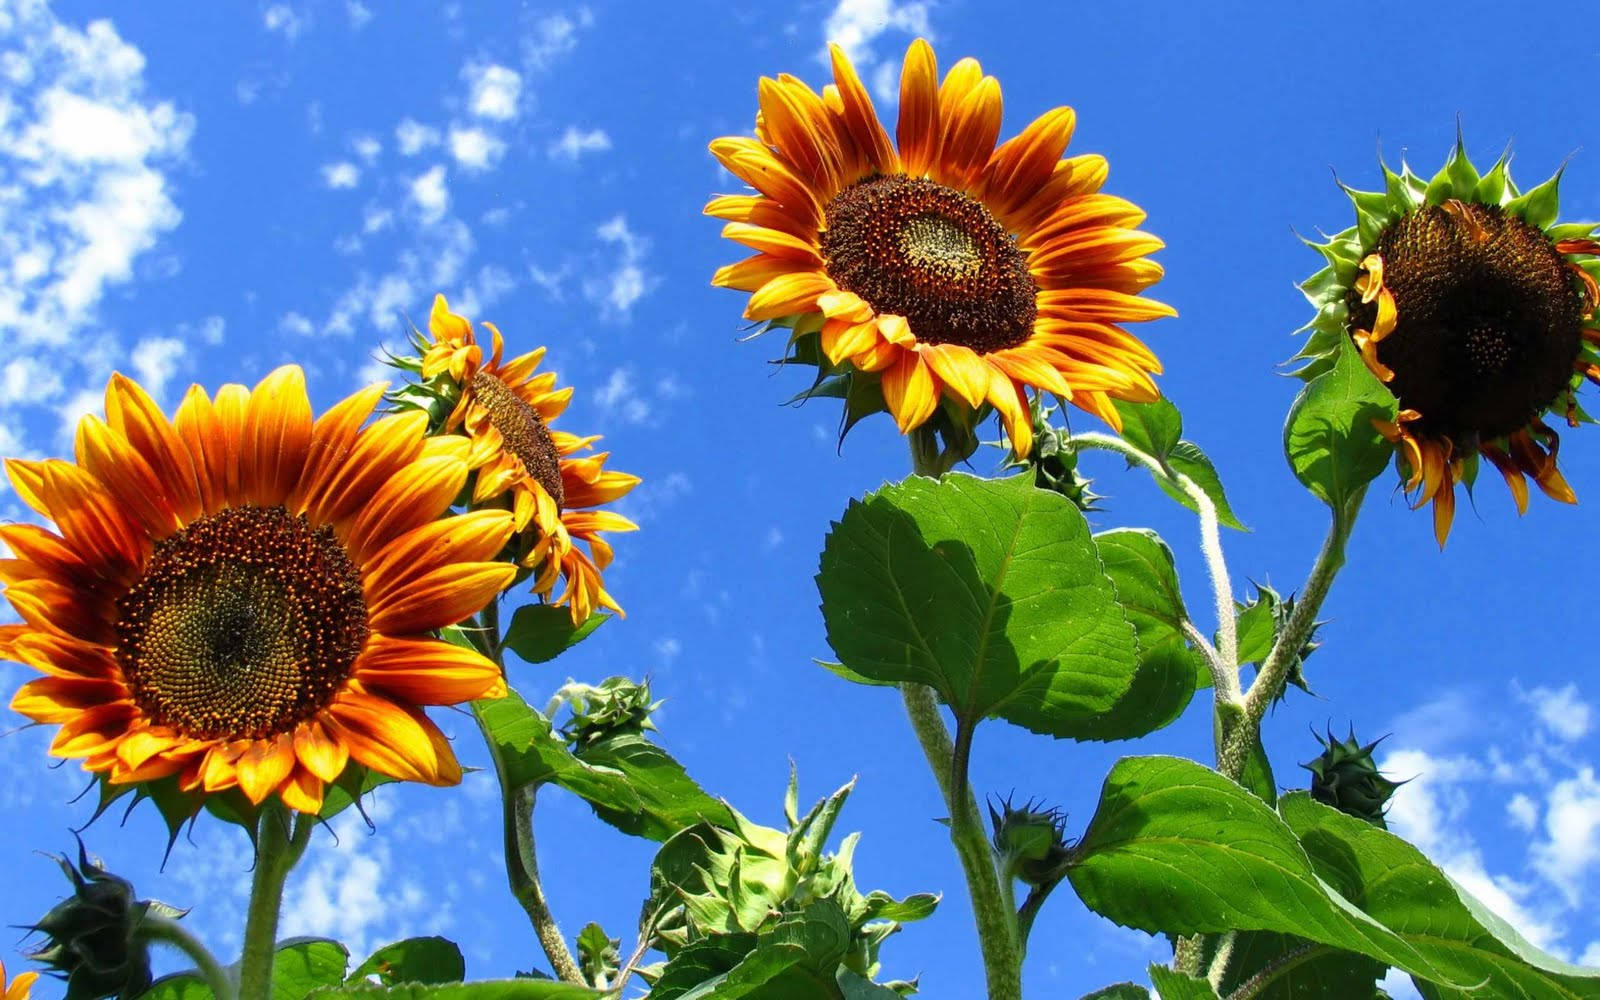 A vibrant sunflower against a clear blue summer sky. Wallpaper